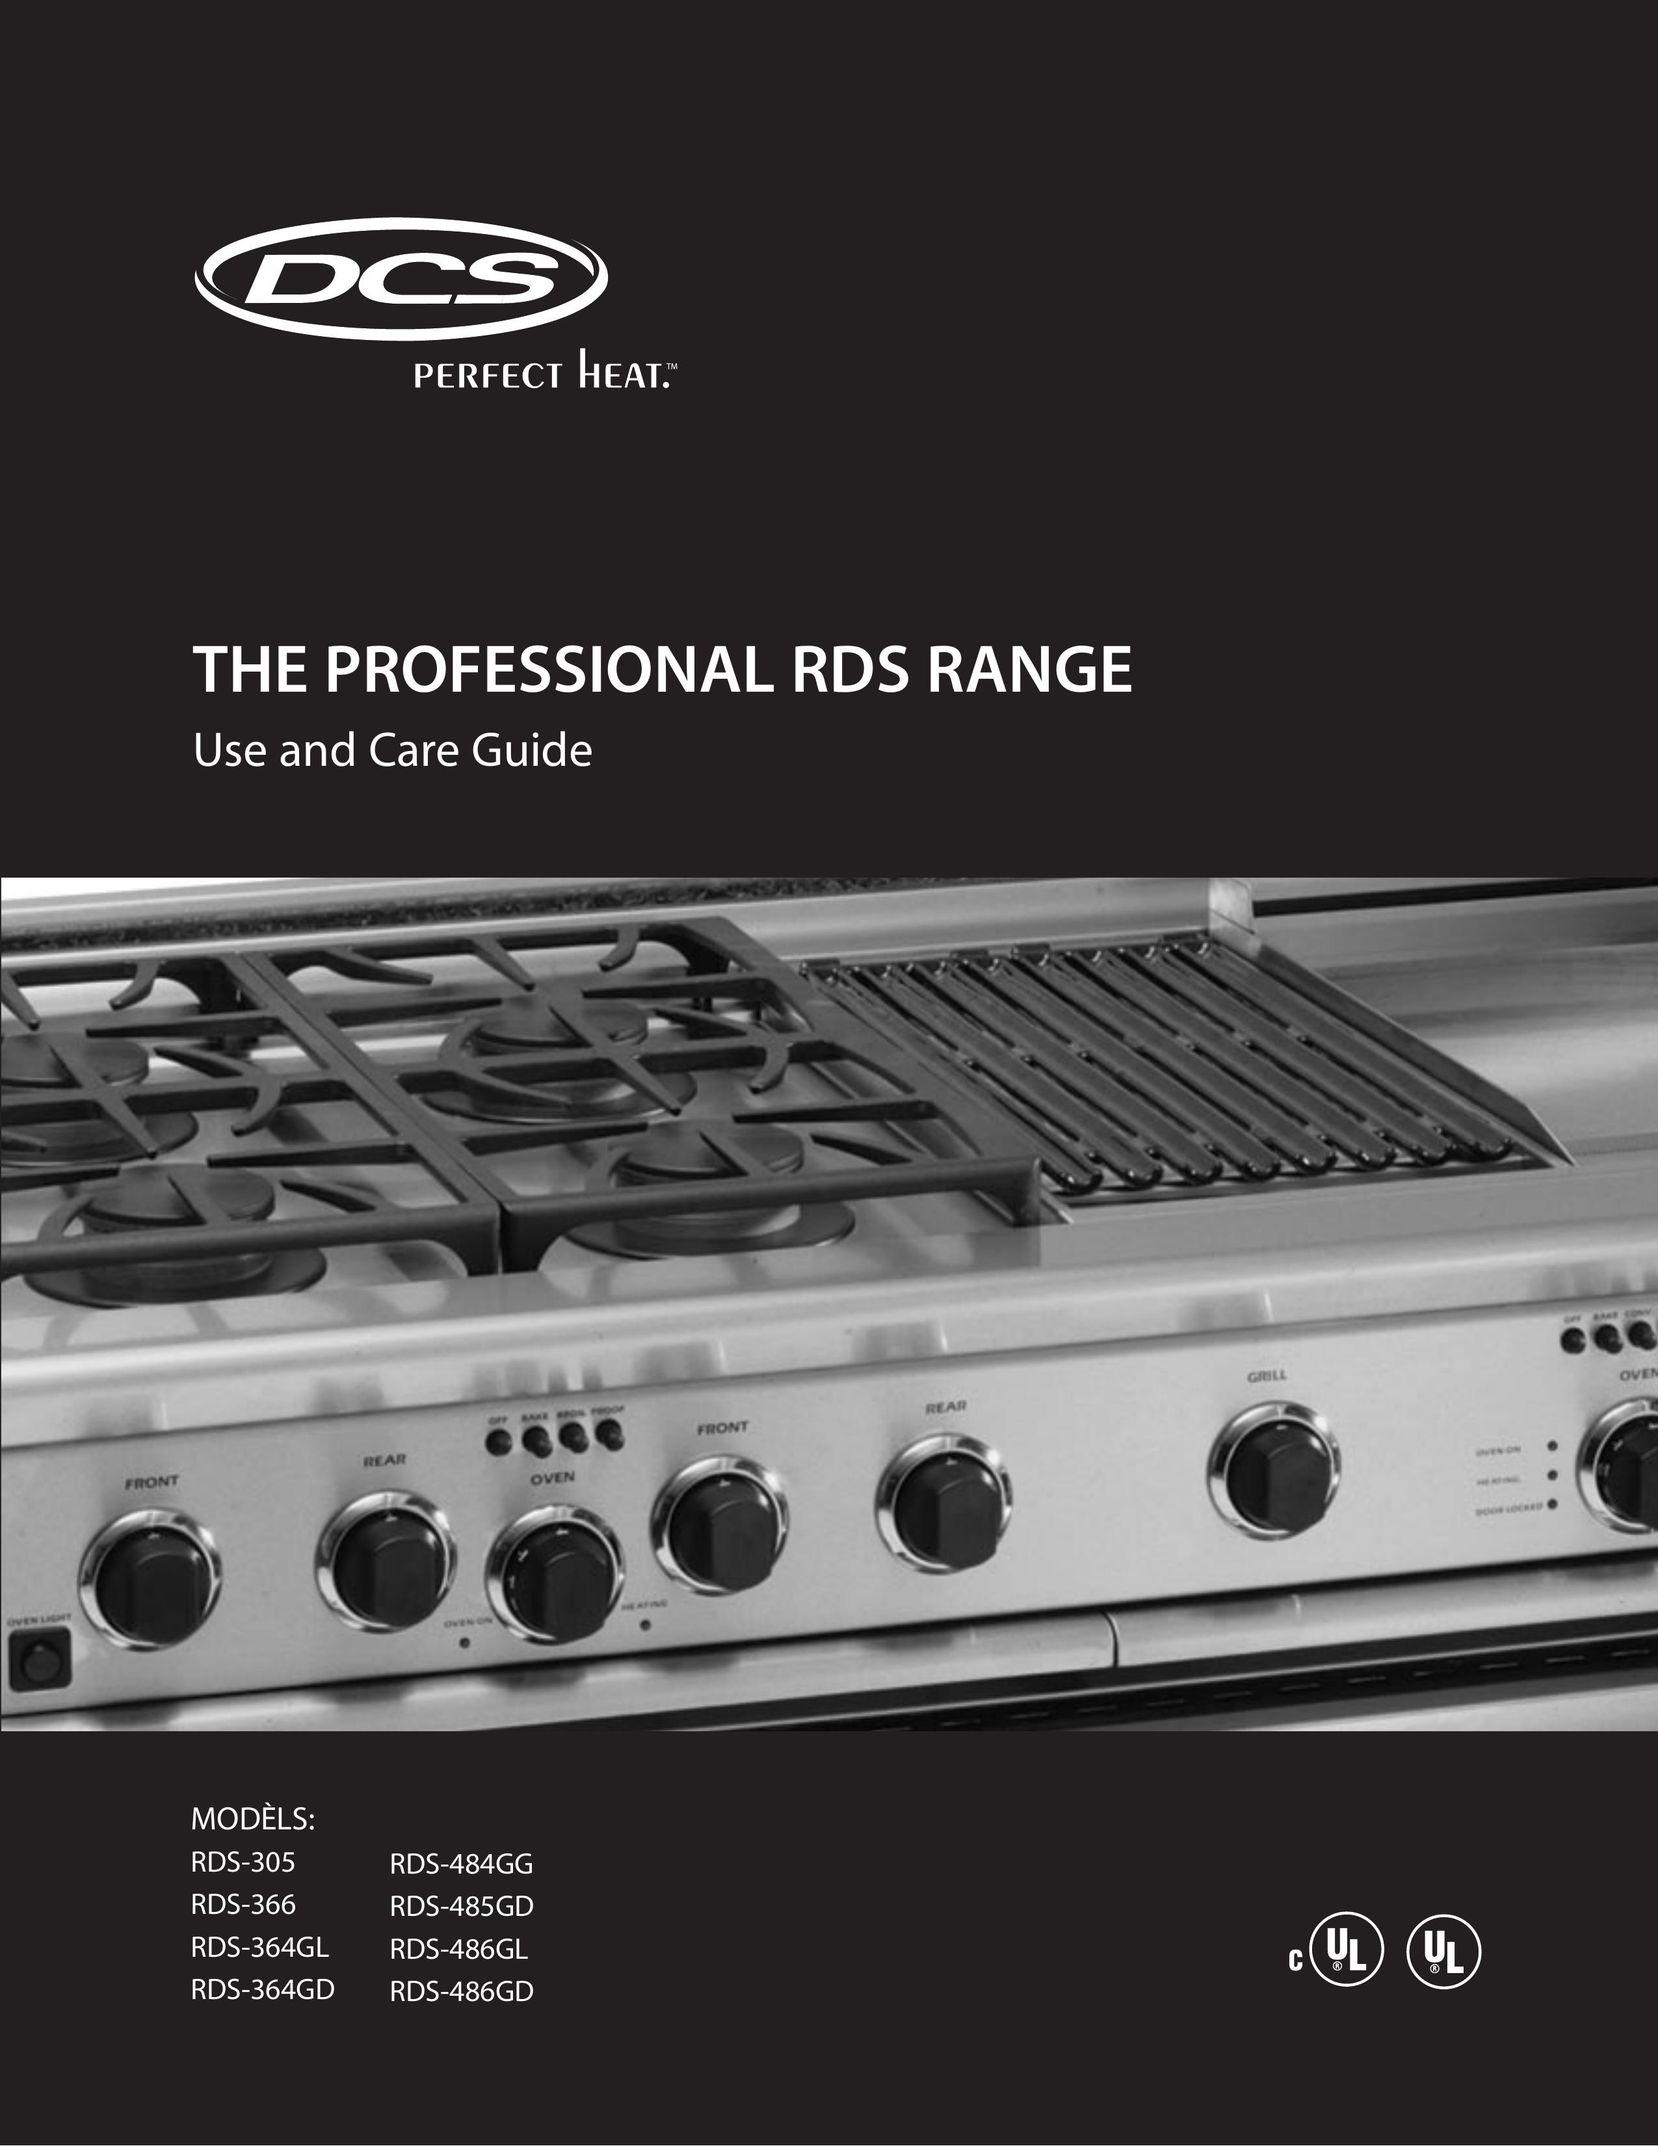 DCS RDS-484GG Range User Manual